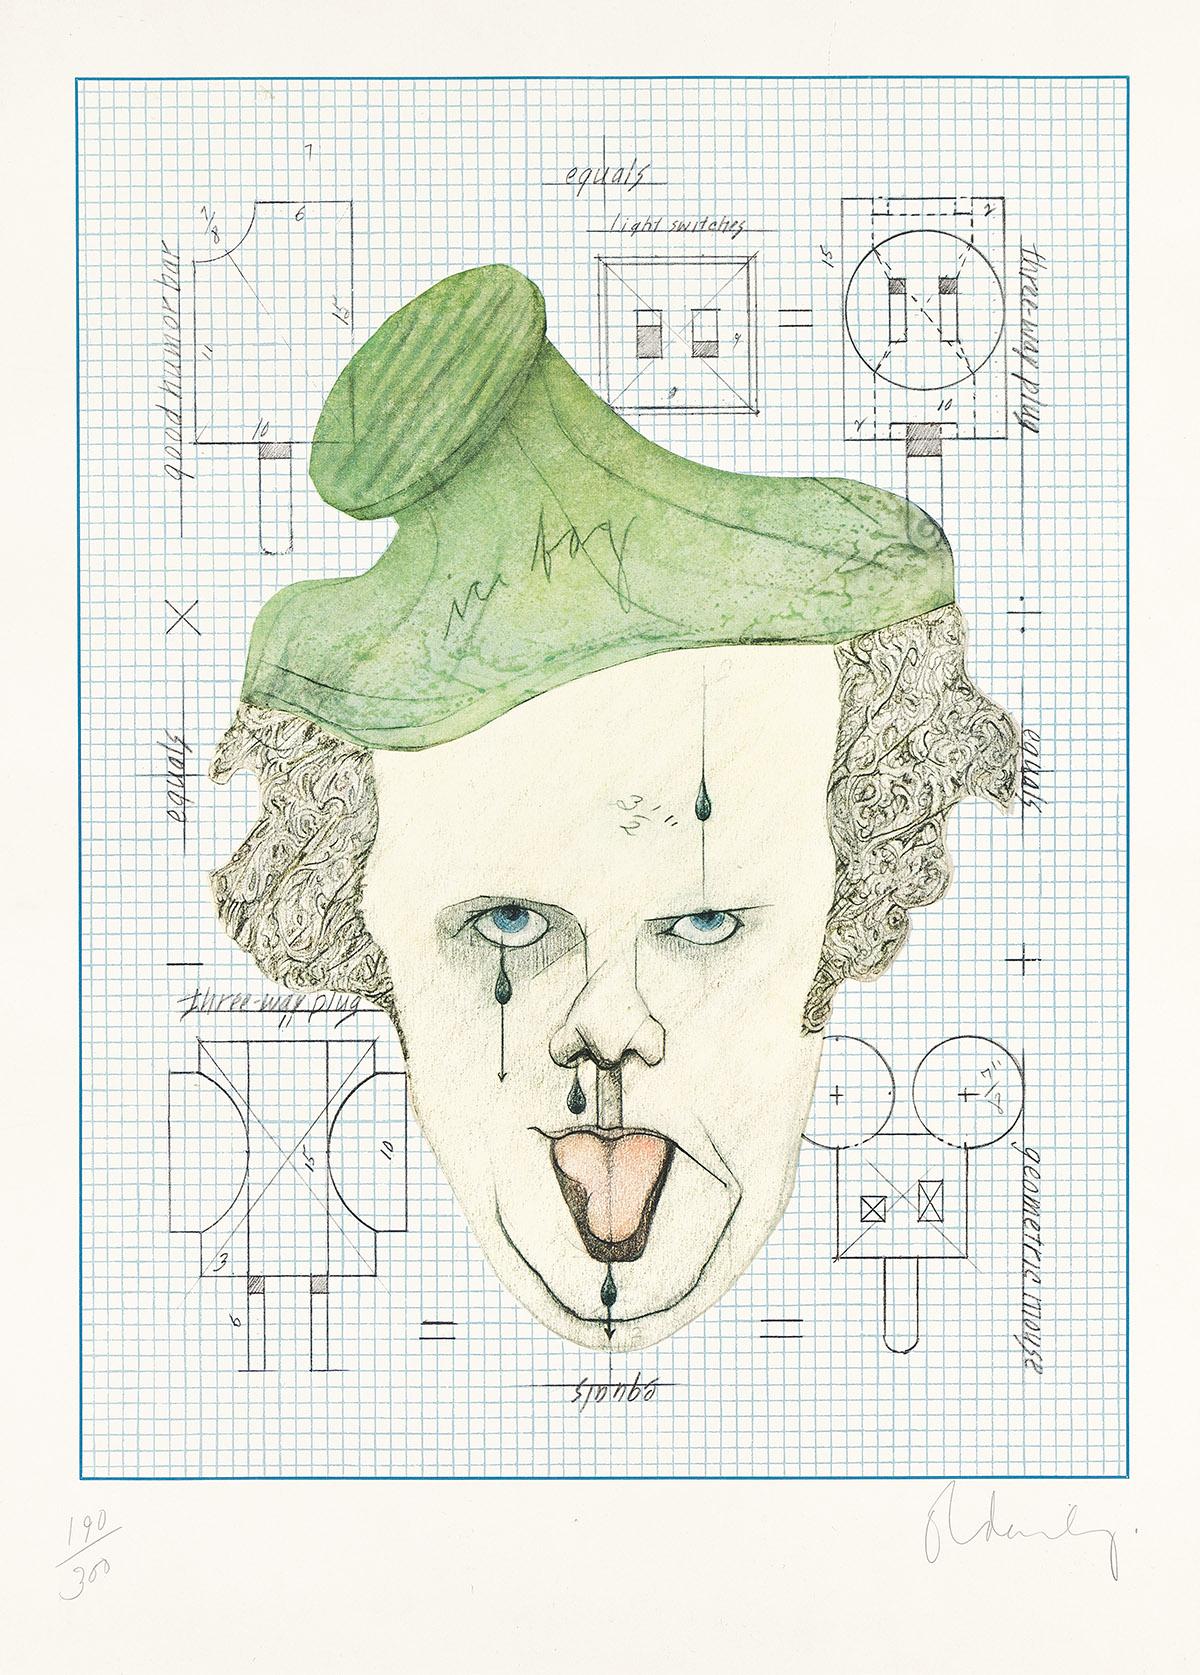 Claes Oldenburg Figurative Print - Symbolic Self-Portrait with Equals